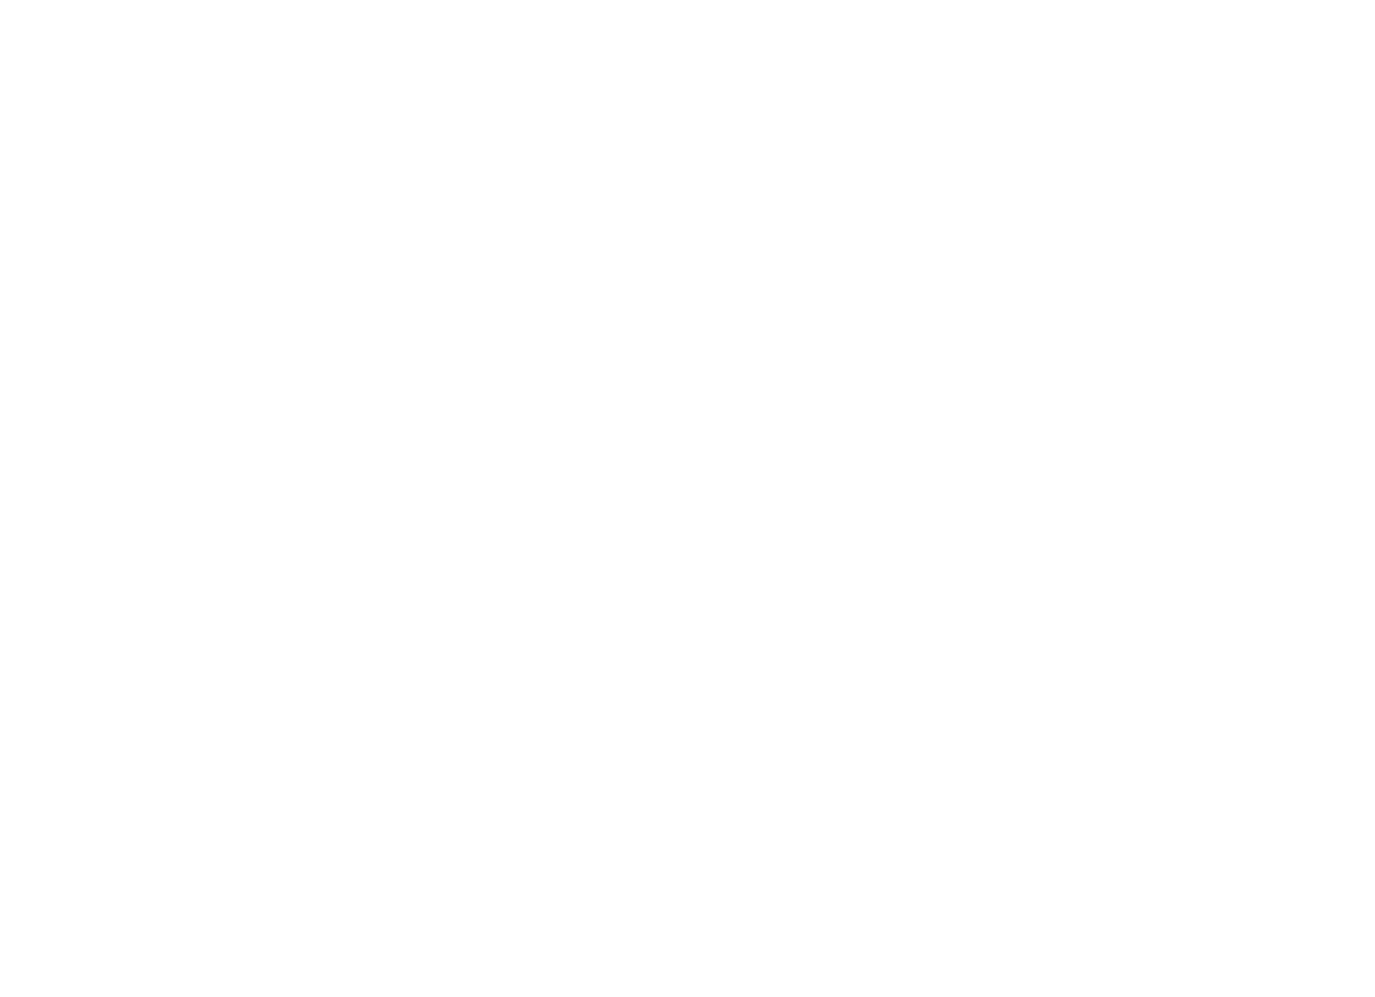 Maintenance Tech Value | Arlington, VA | Facilities Maintenance Corp